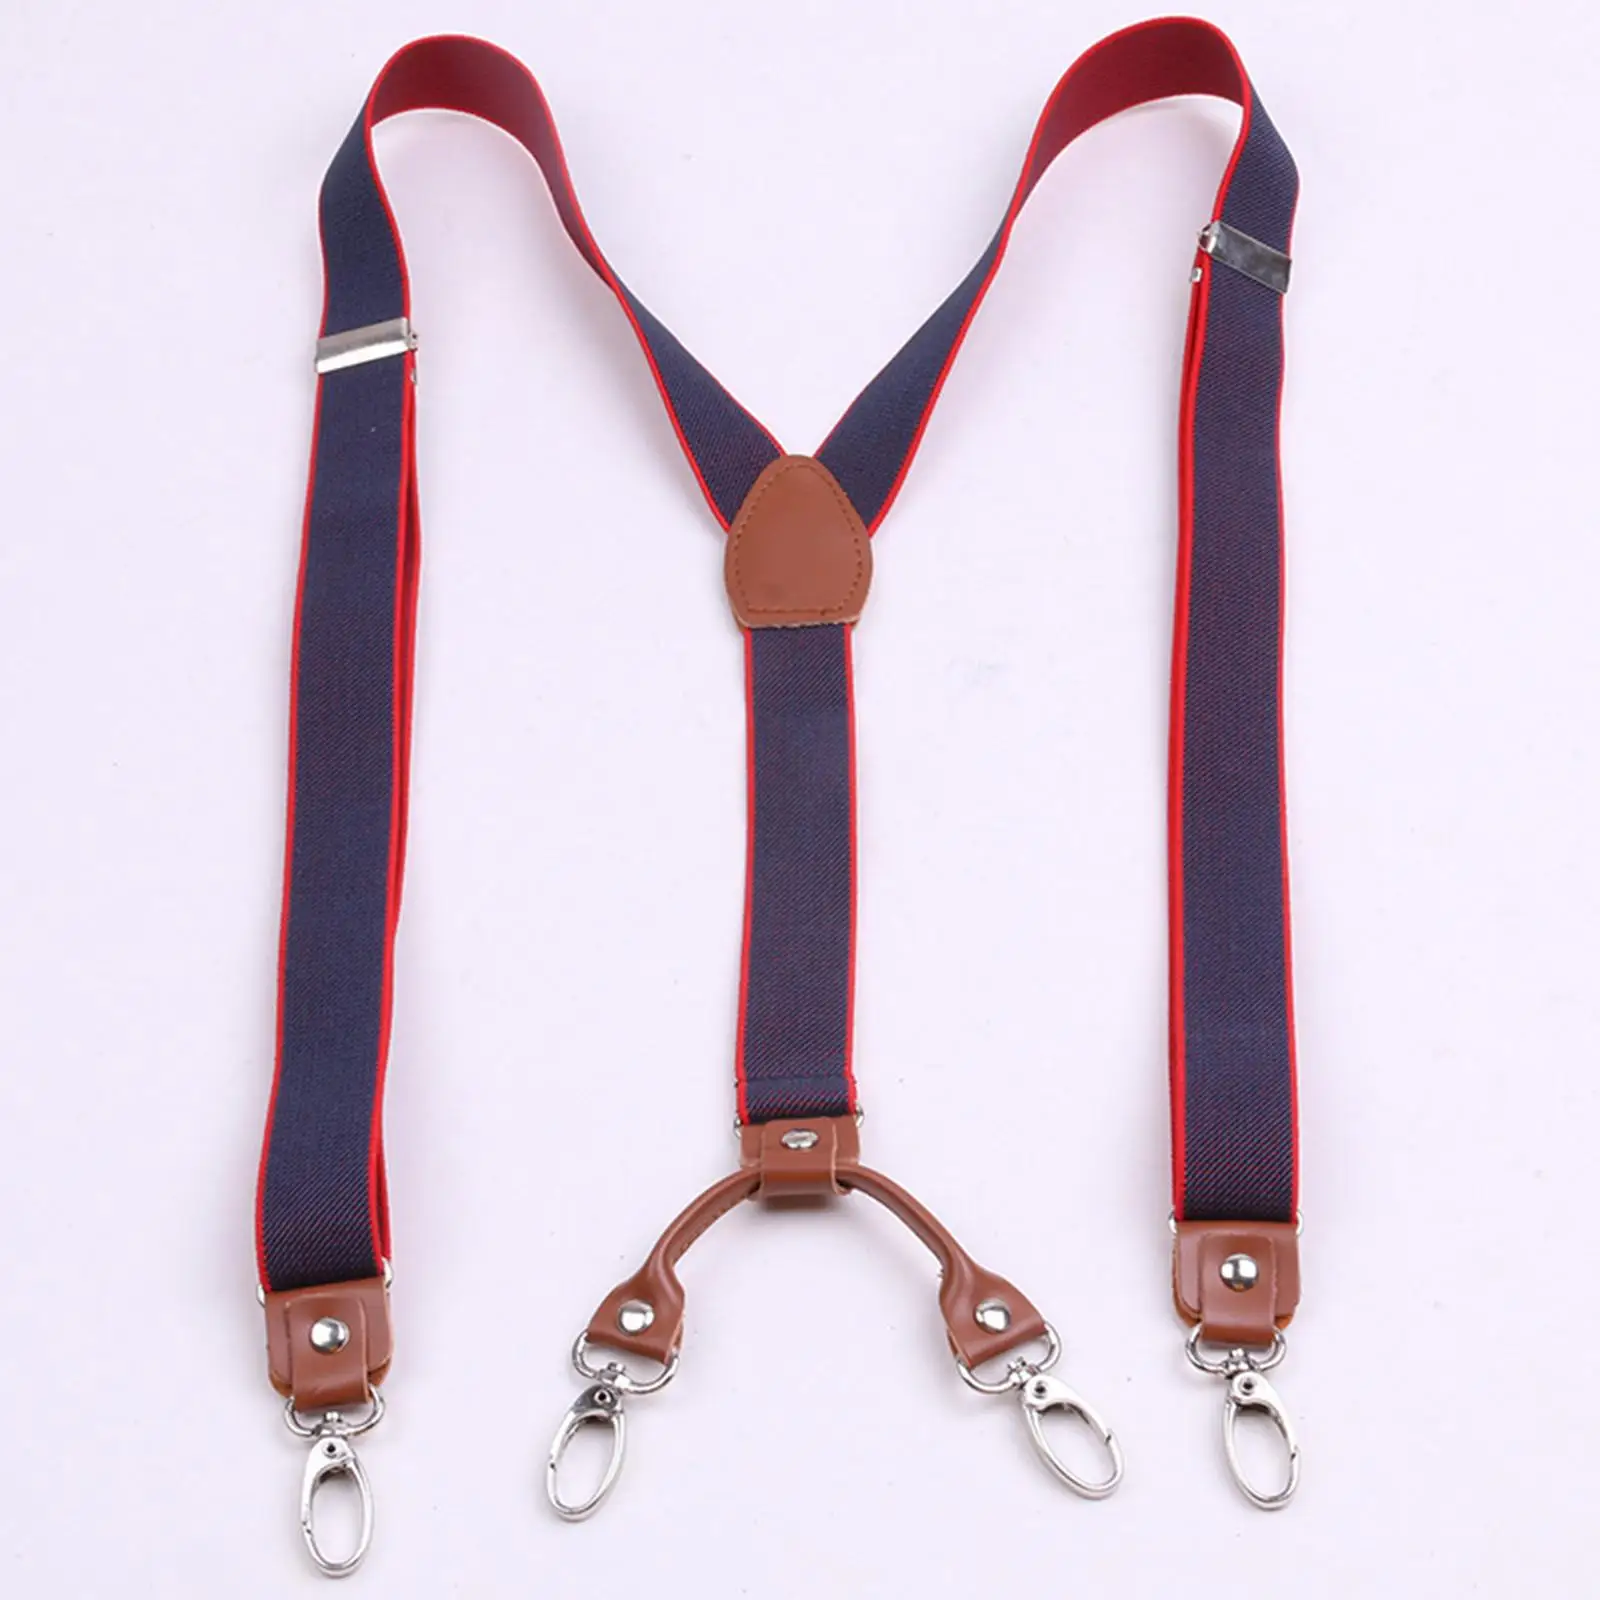 Suspenders for Men with 4 Swivel Hooks Y Back Construction Heavy Duty Belt Loops Elastic Adjustable Pants Braces for Work Casual